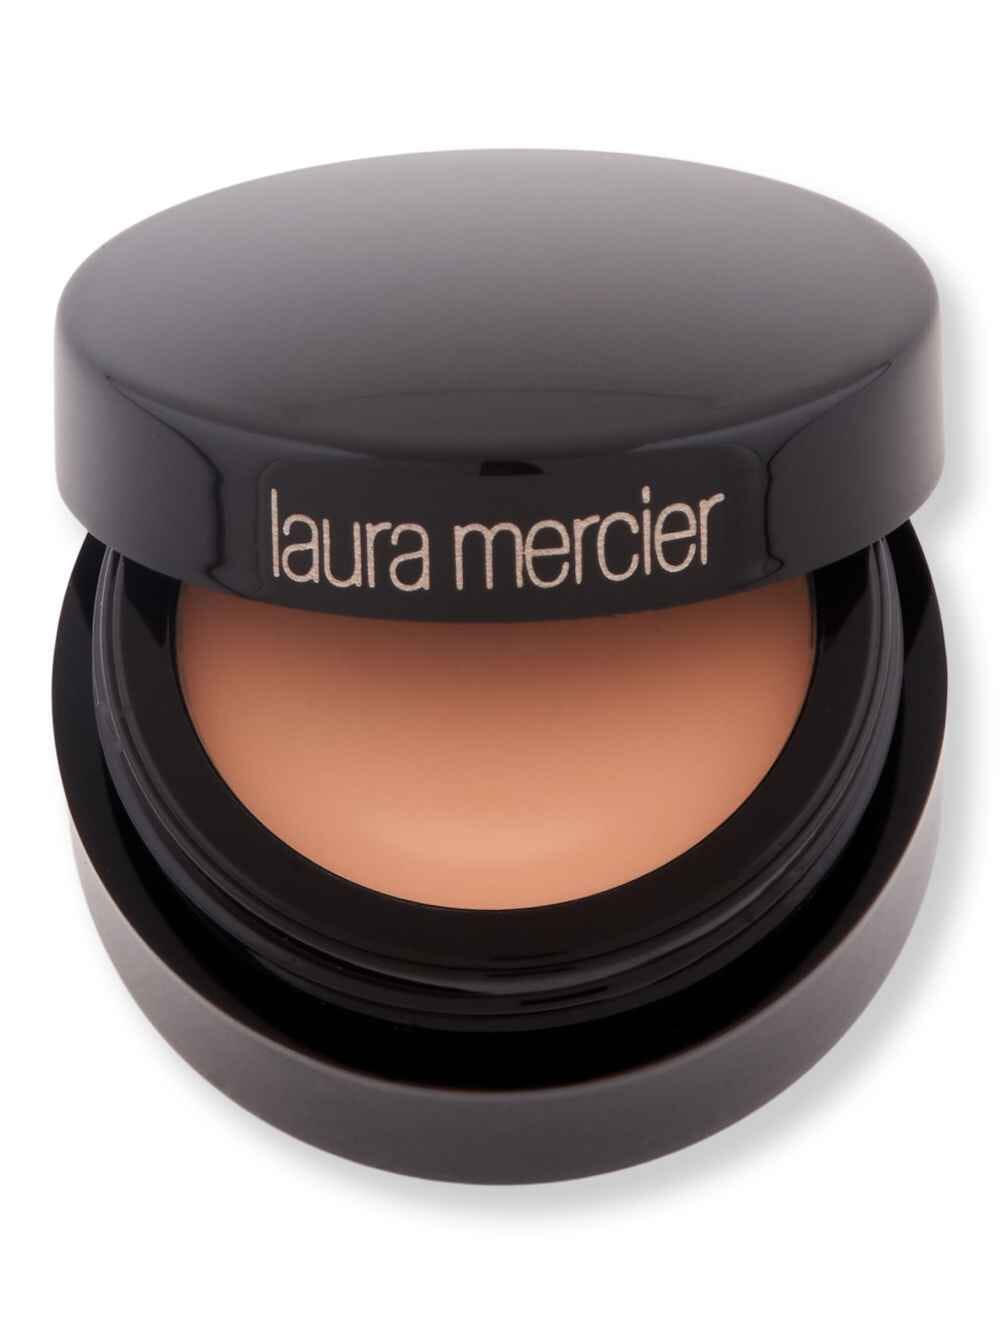 Laura Mercier Laura Mercier Secret Concealer 0.08 oz2.2 g2 Face Concealers 